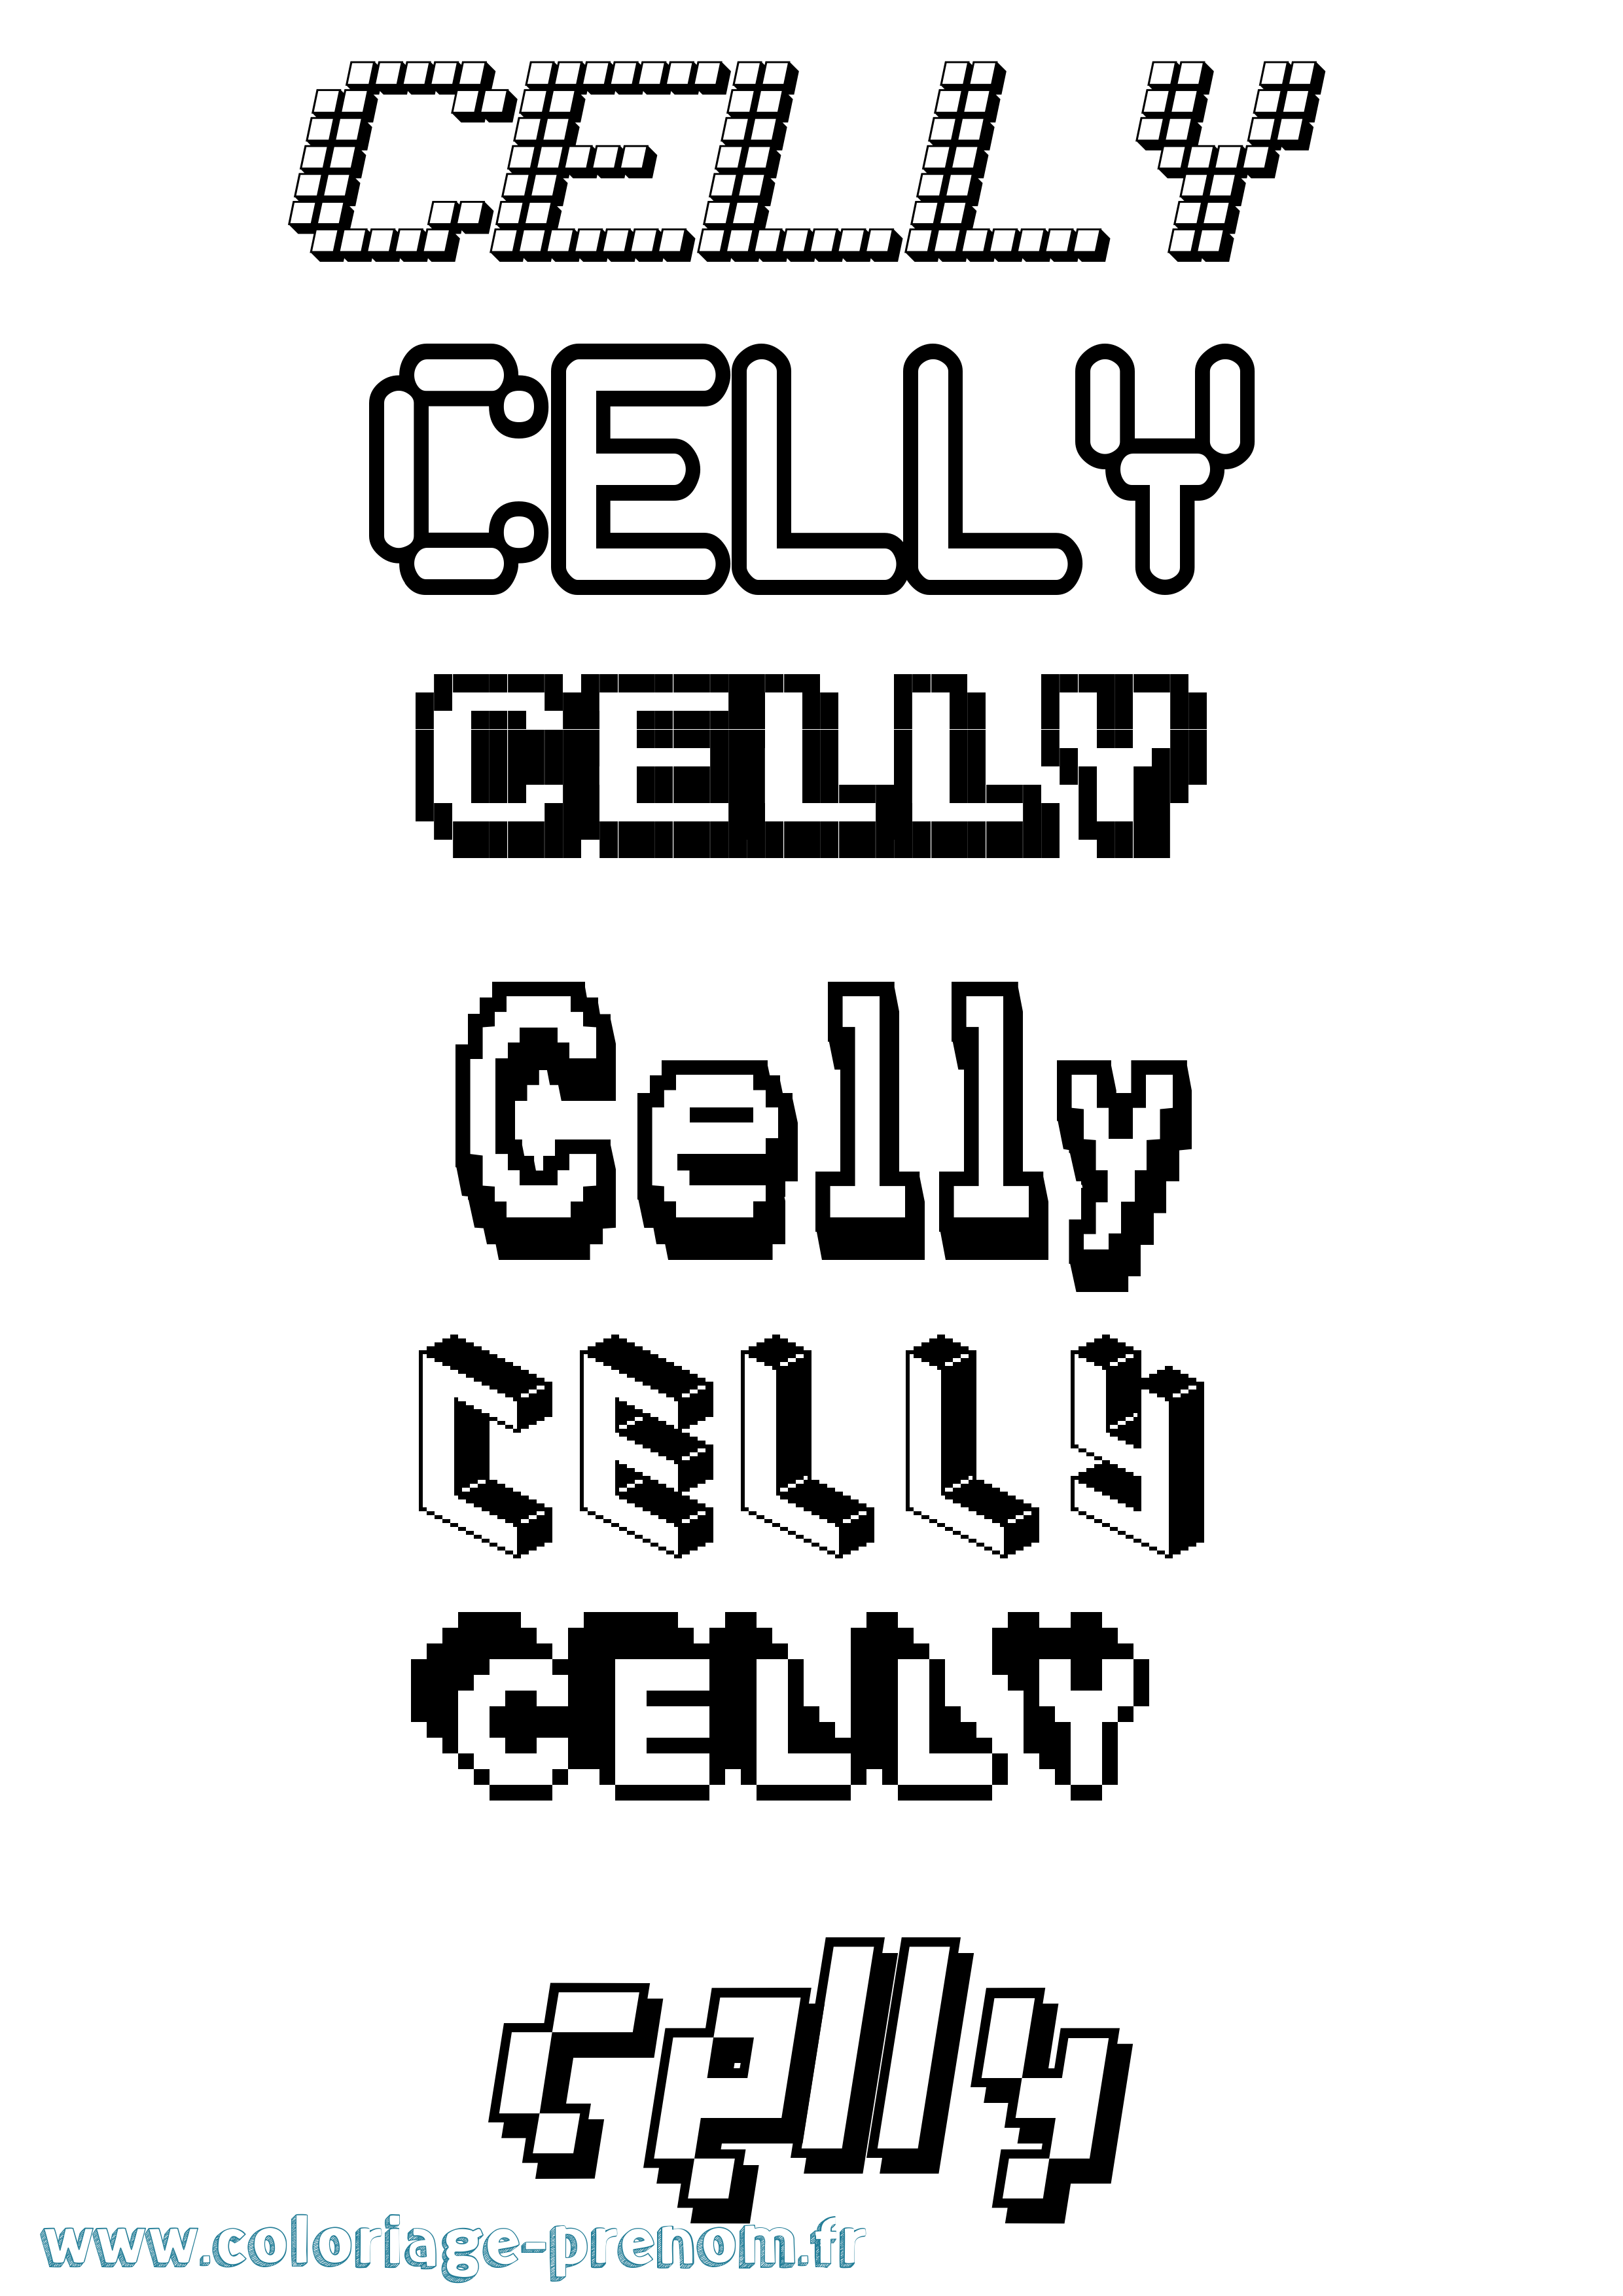 Coloriage prénom Celly Pixel